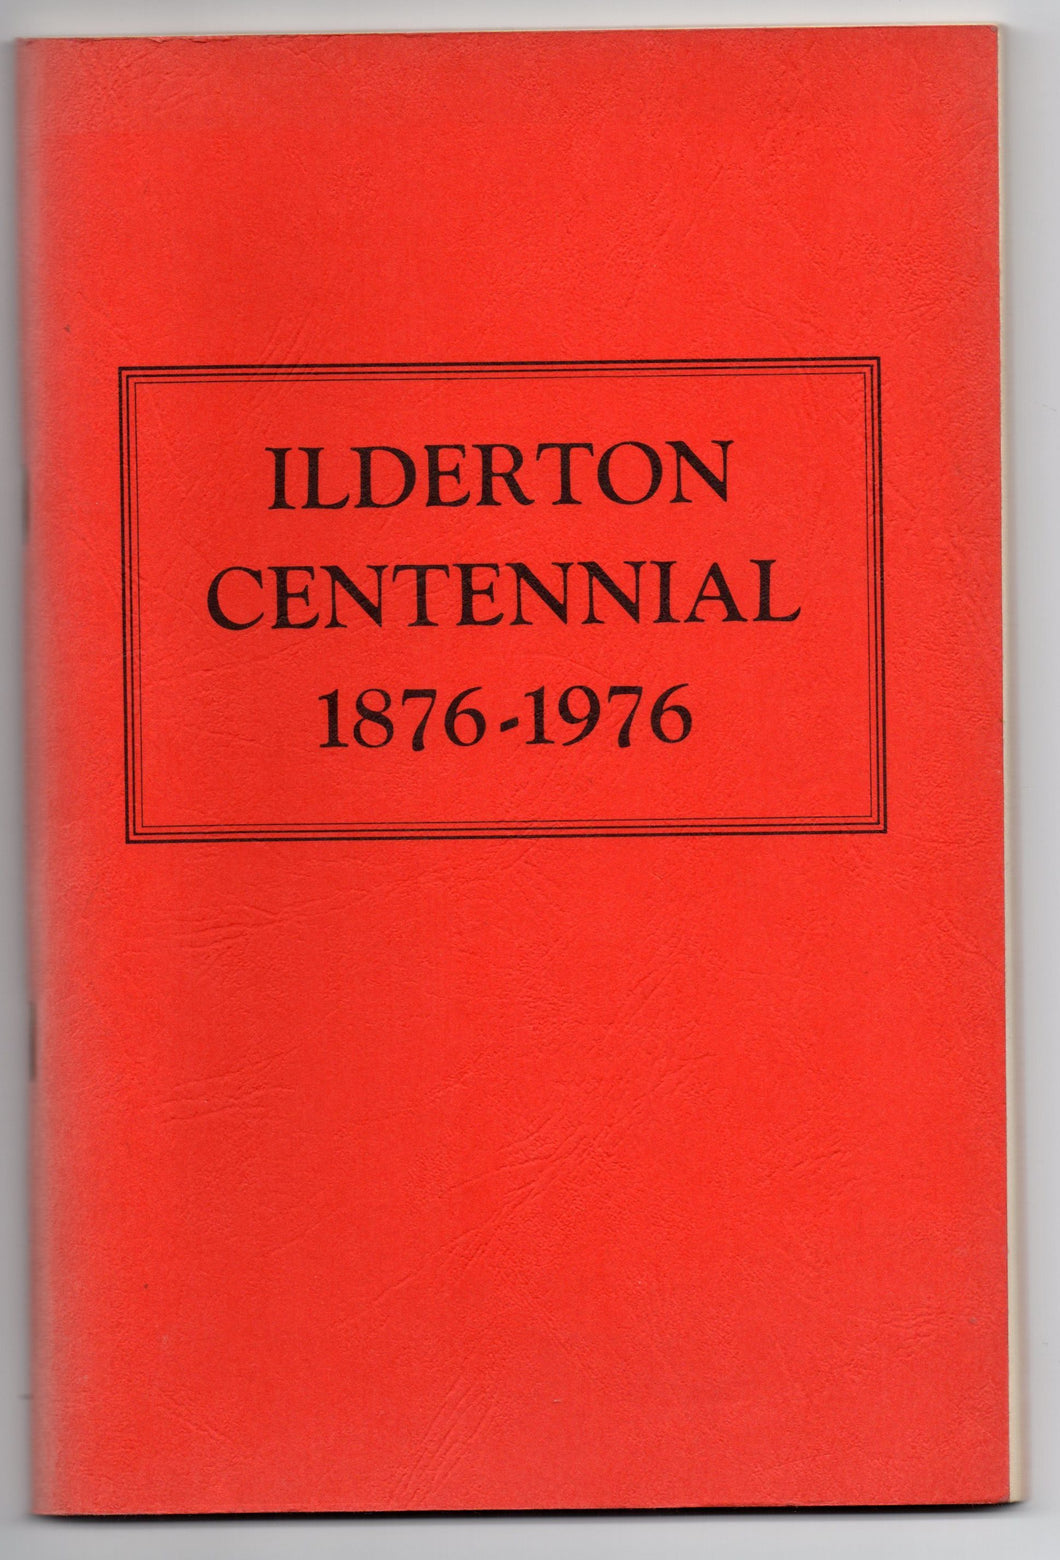 Ilderton Centennial 1876-1976